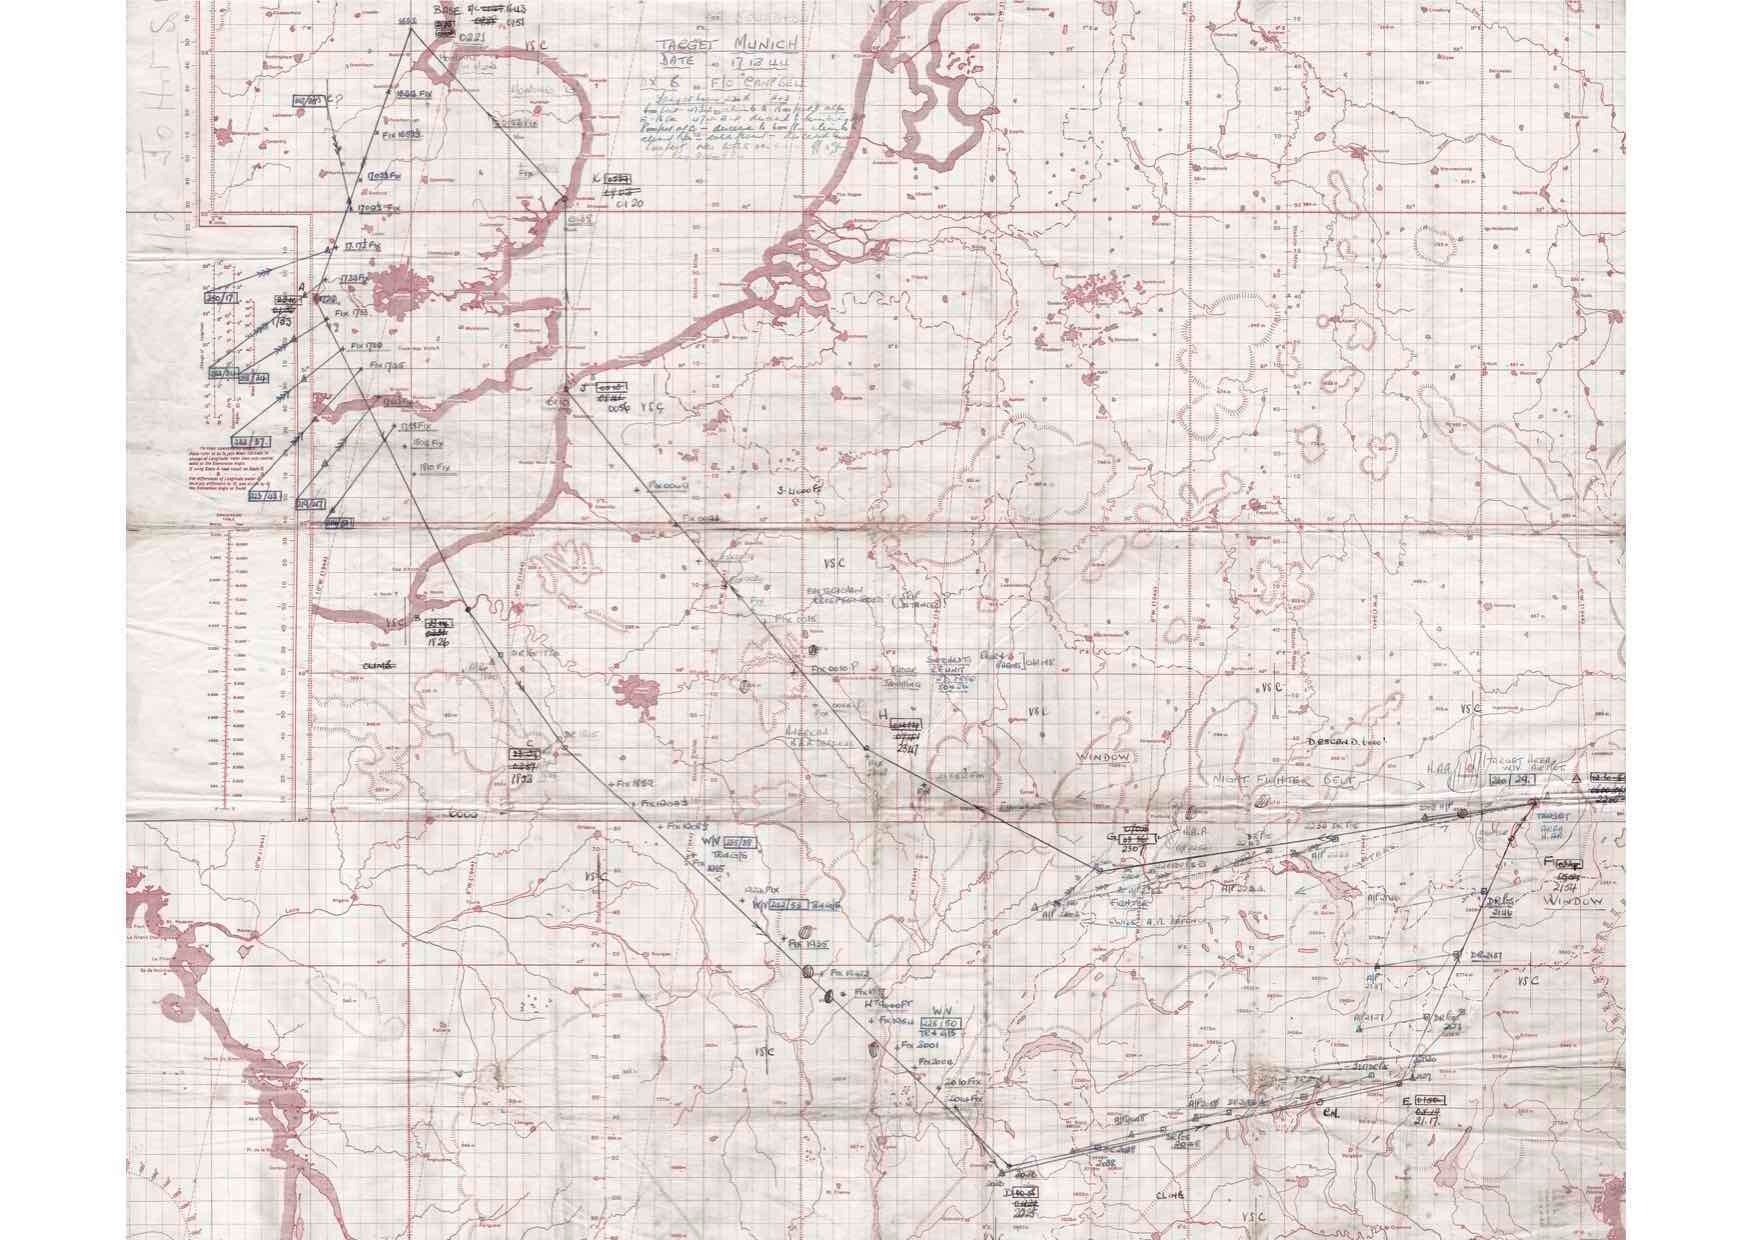 One night map December 1944